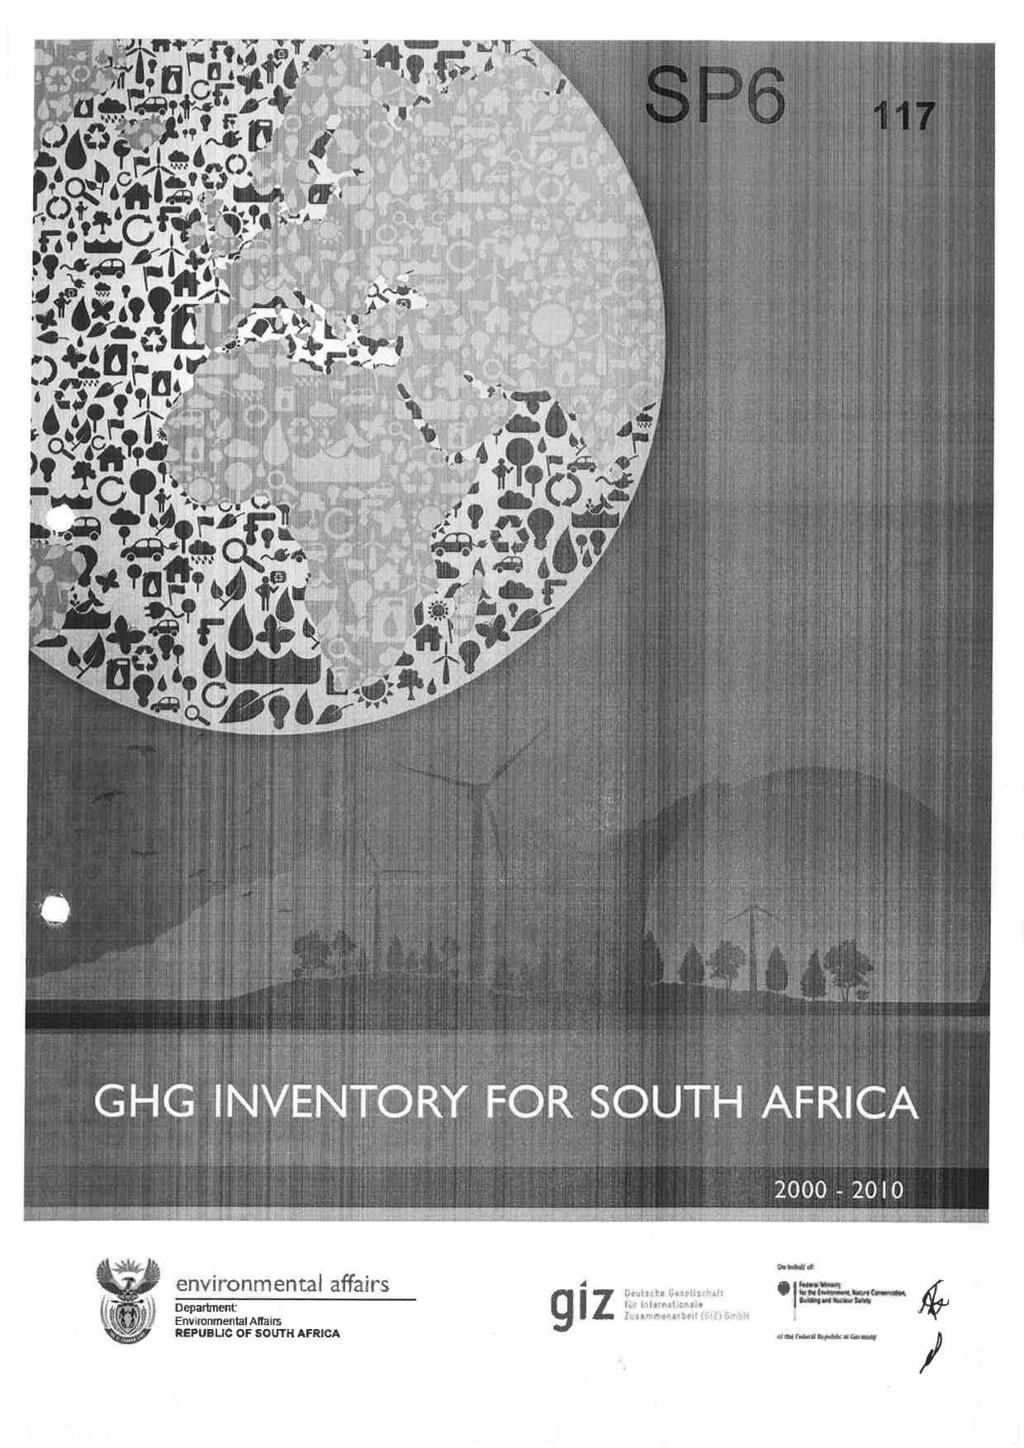 GHG INVENTORY FOR SOUTH AFRICA environmental affairs Environmental Affairs REPUBLIC OF SOUTH AFRICA giz I v t